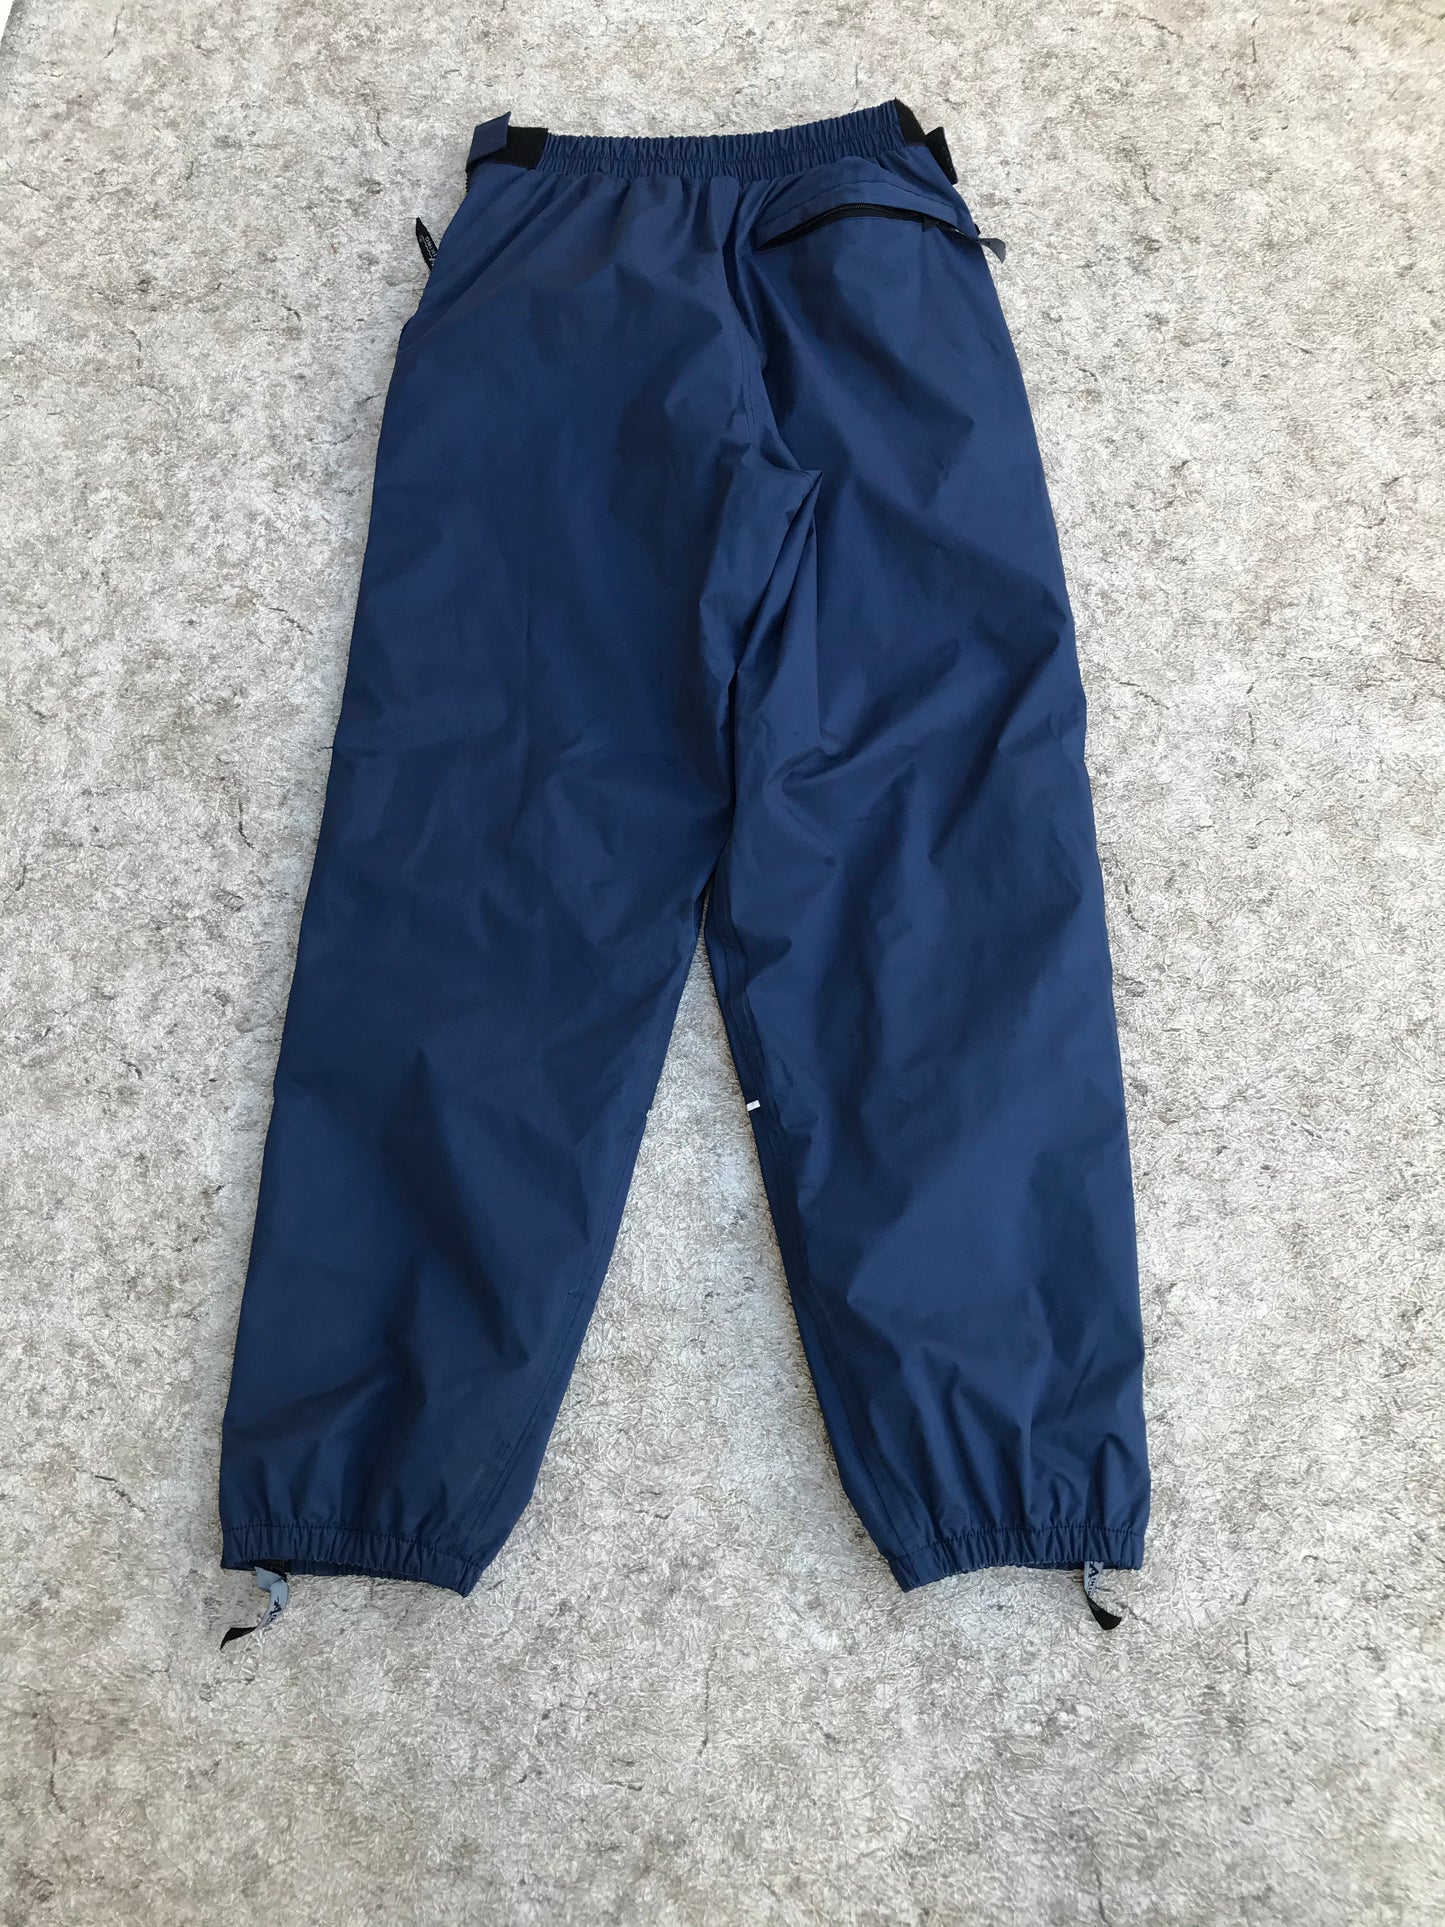 Rain Pants Men's Size Large Viking Marine Blue Waterproof Full Zippers UP Both Sizes Reflectors